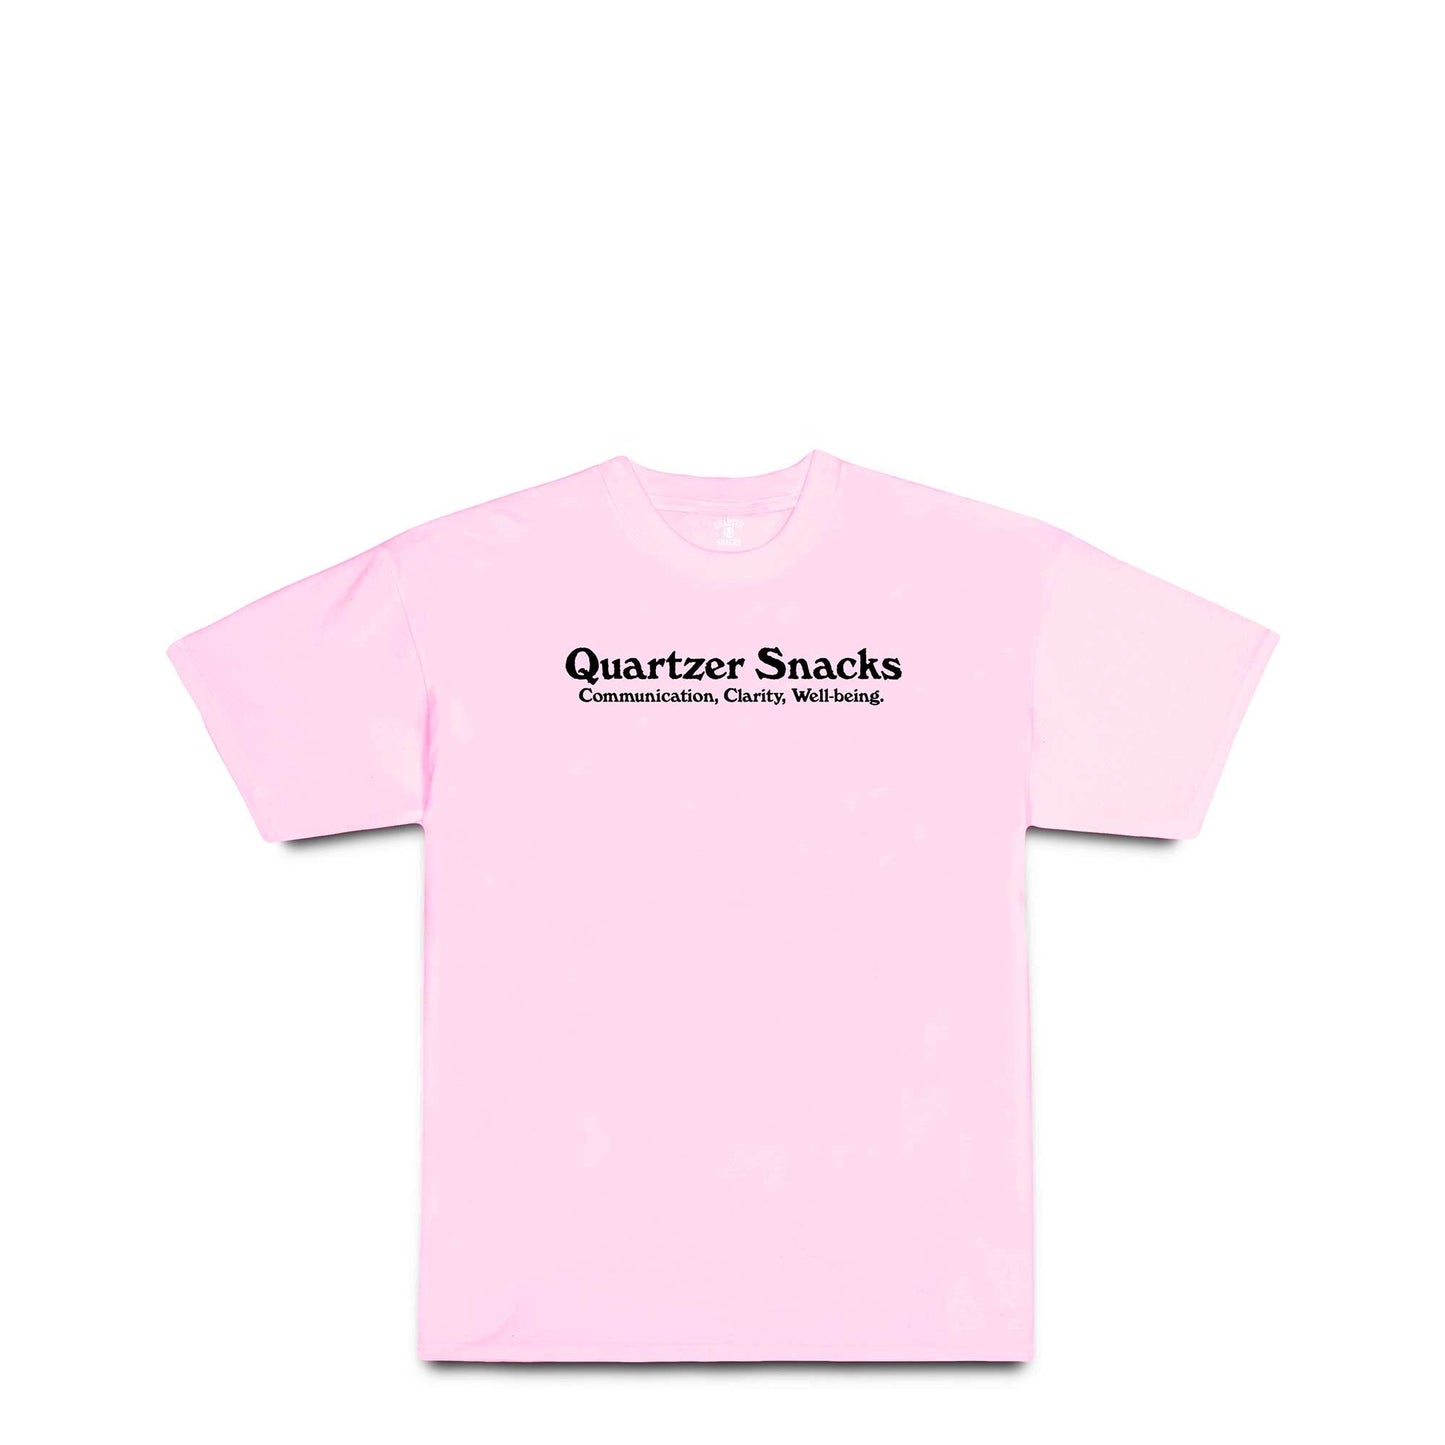 Quarter Snacks Gem Snackman Tee, pink - Tiki Room Skateboards - 2